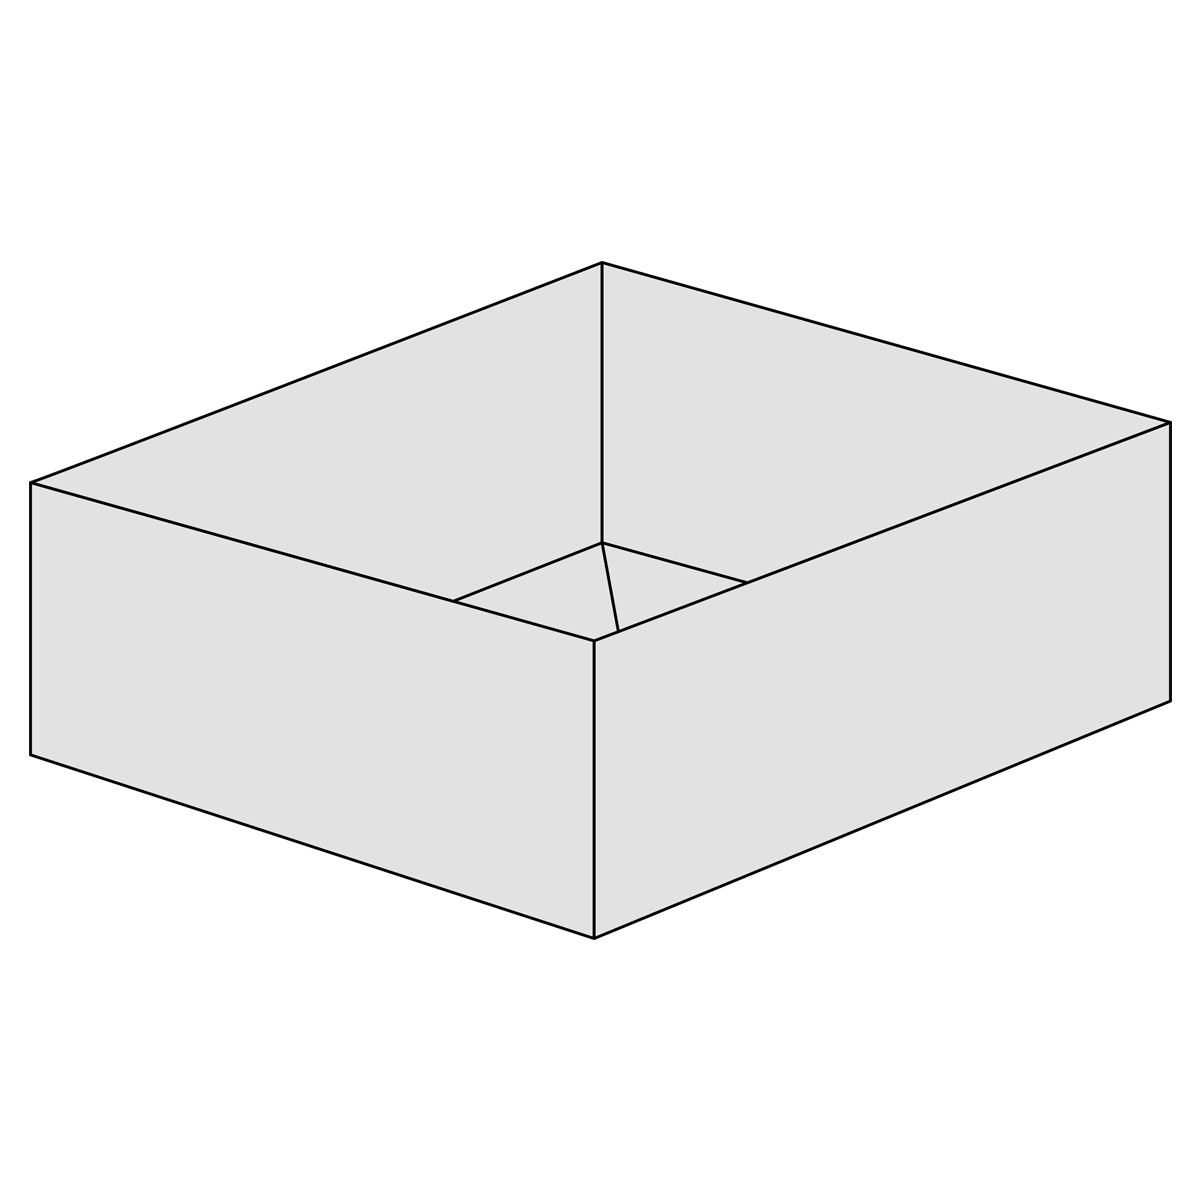 How To Do A Origami Box How To Fold A Traditional Origami Box Masu Box